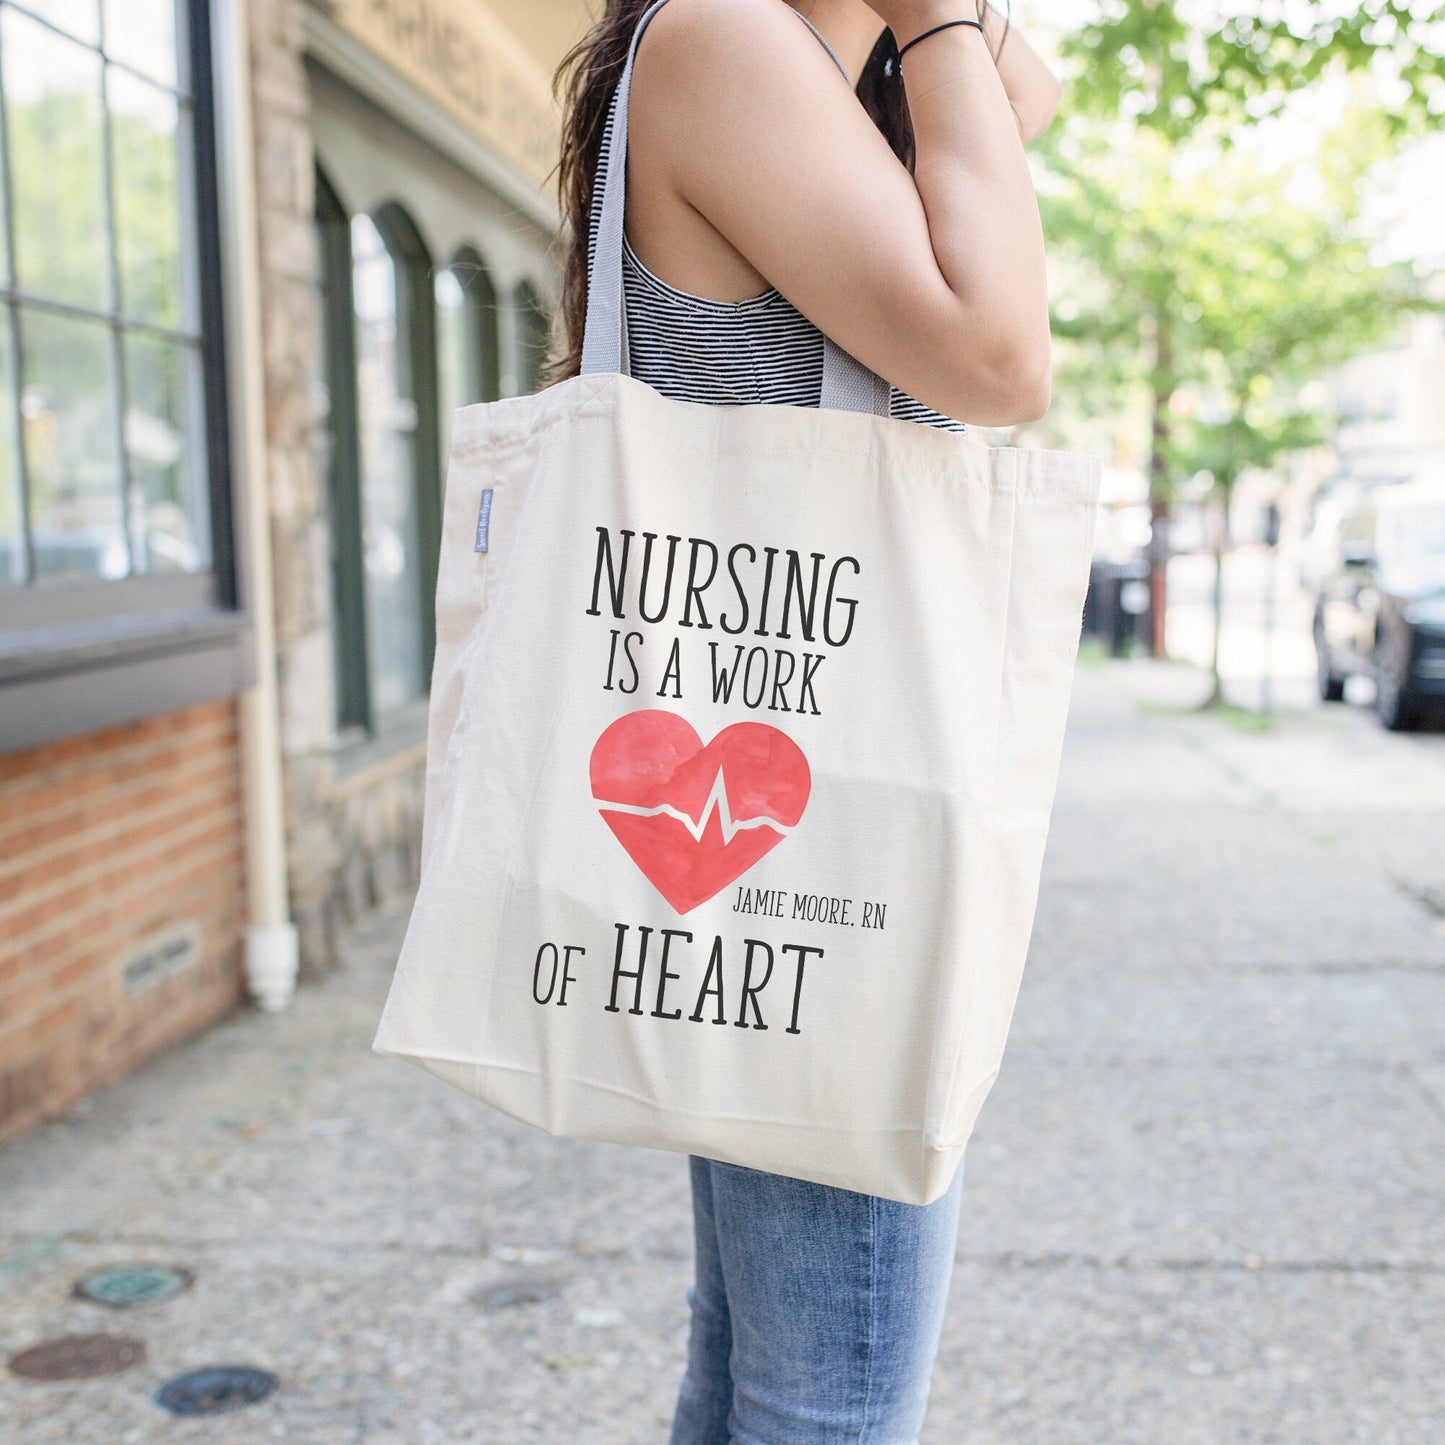 Nursing Is A Work Of Heart Nurse Tote Bag | RN Tote | Personalized Tote Bag | Nurse Gift RN Grad | Gift for Nursing Student | Nursing Gift